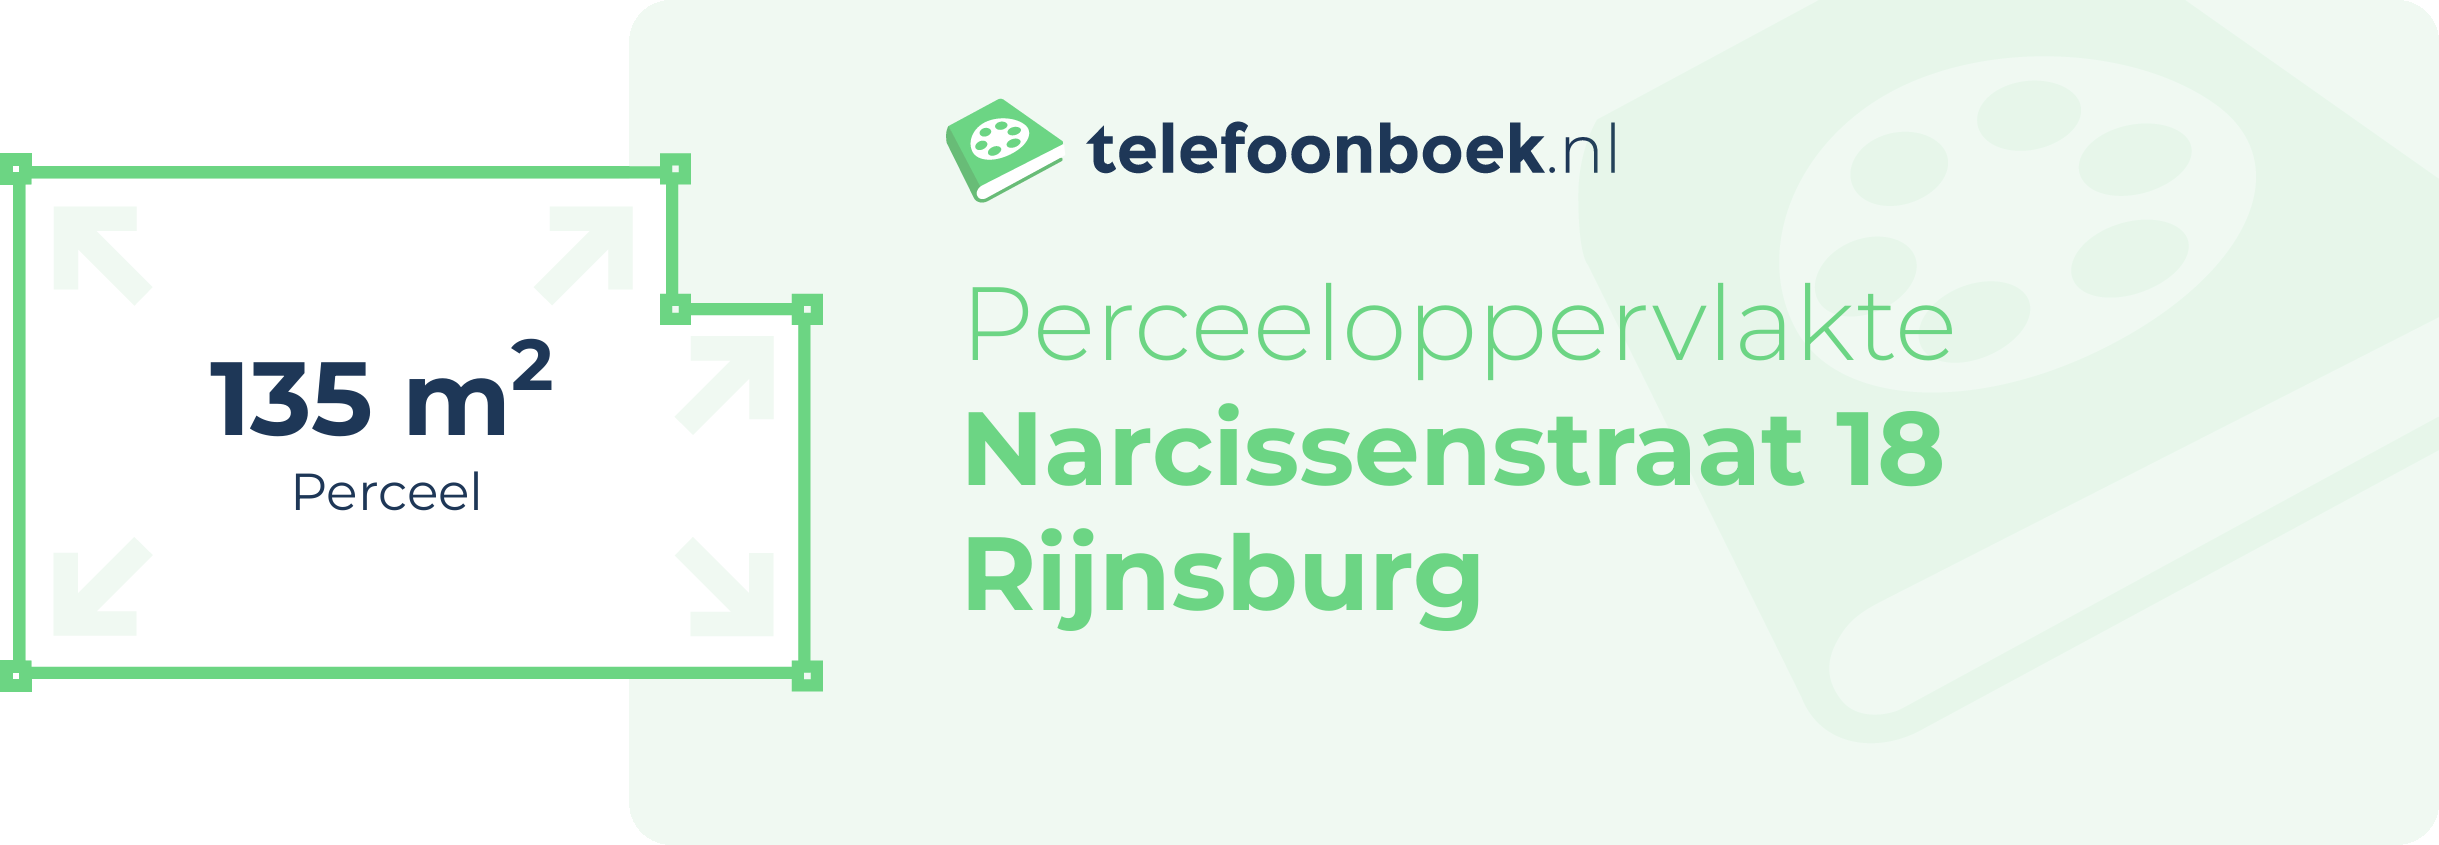 Perceeloppervlakte Narcissenstraat 18 Rijnsburg